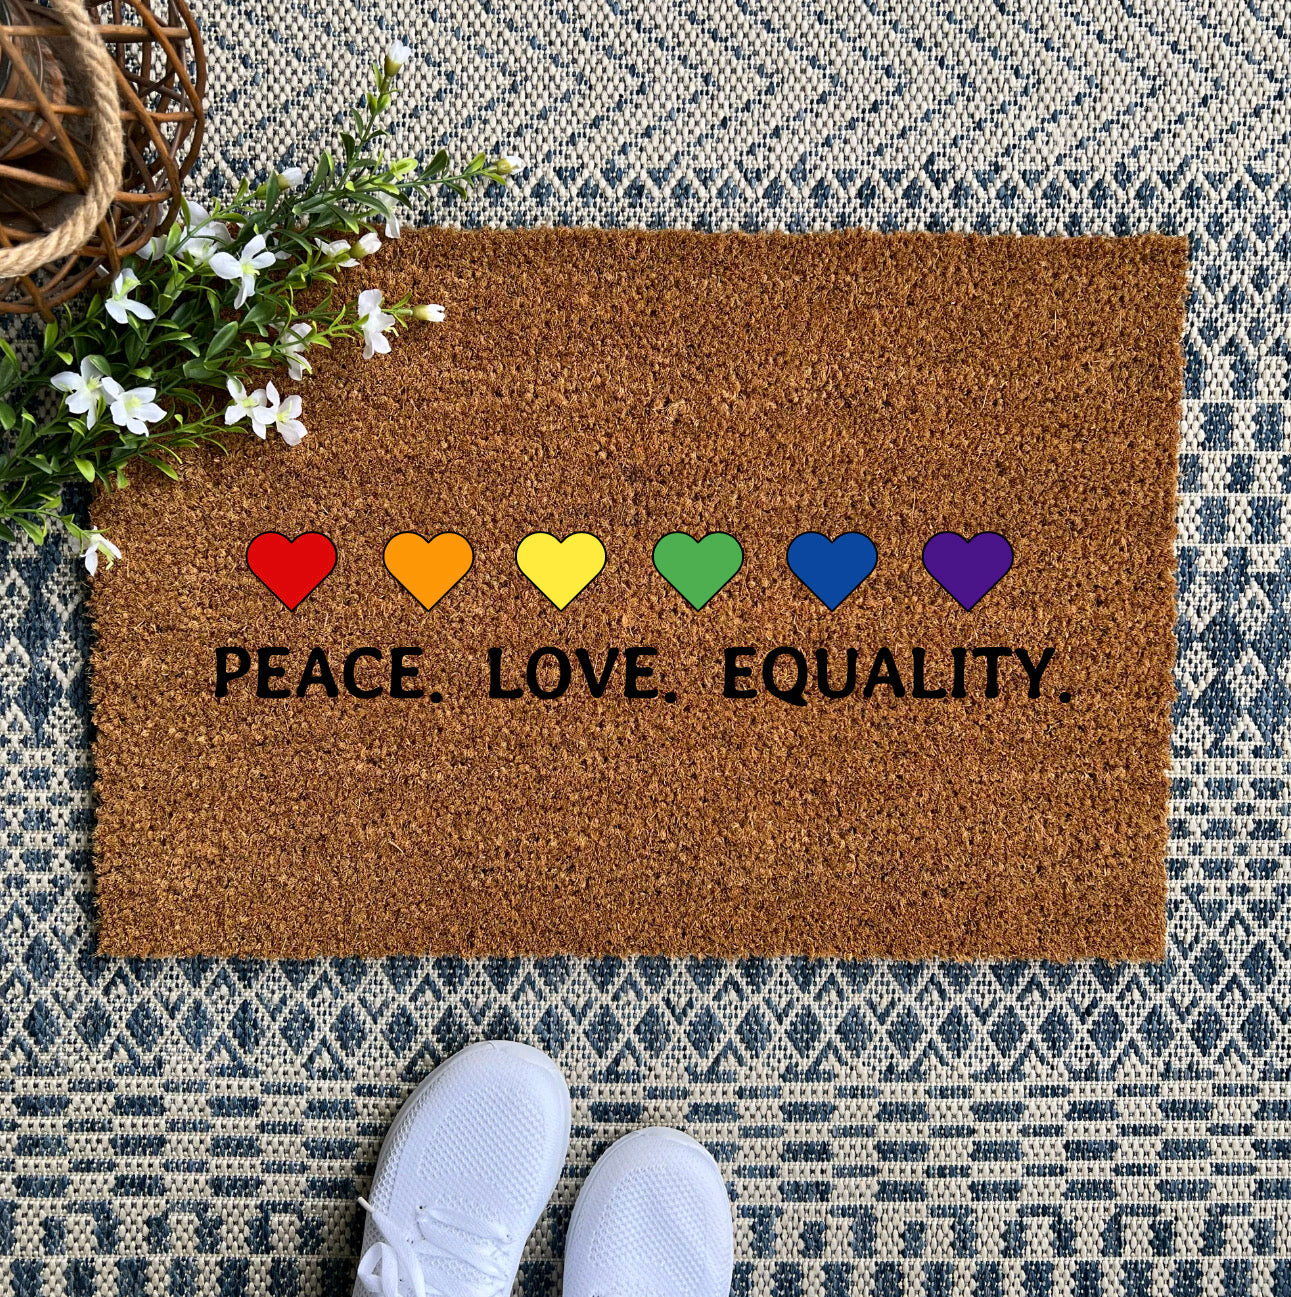 Peace. Love. Equality.